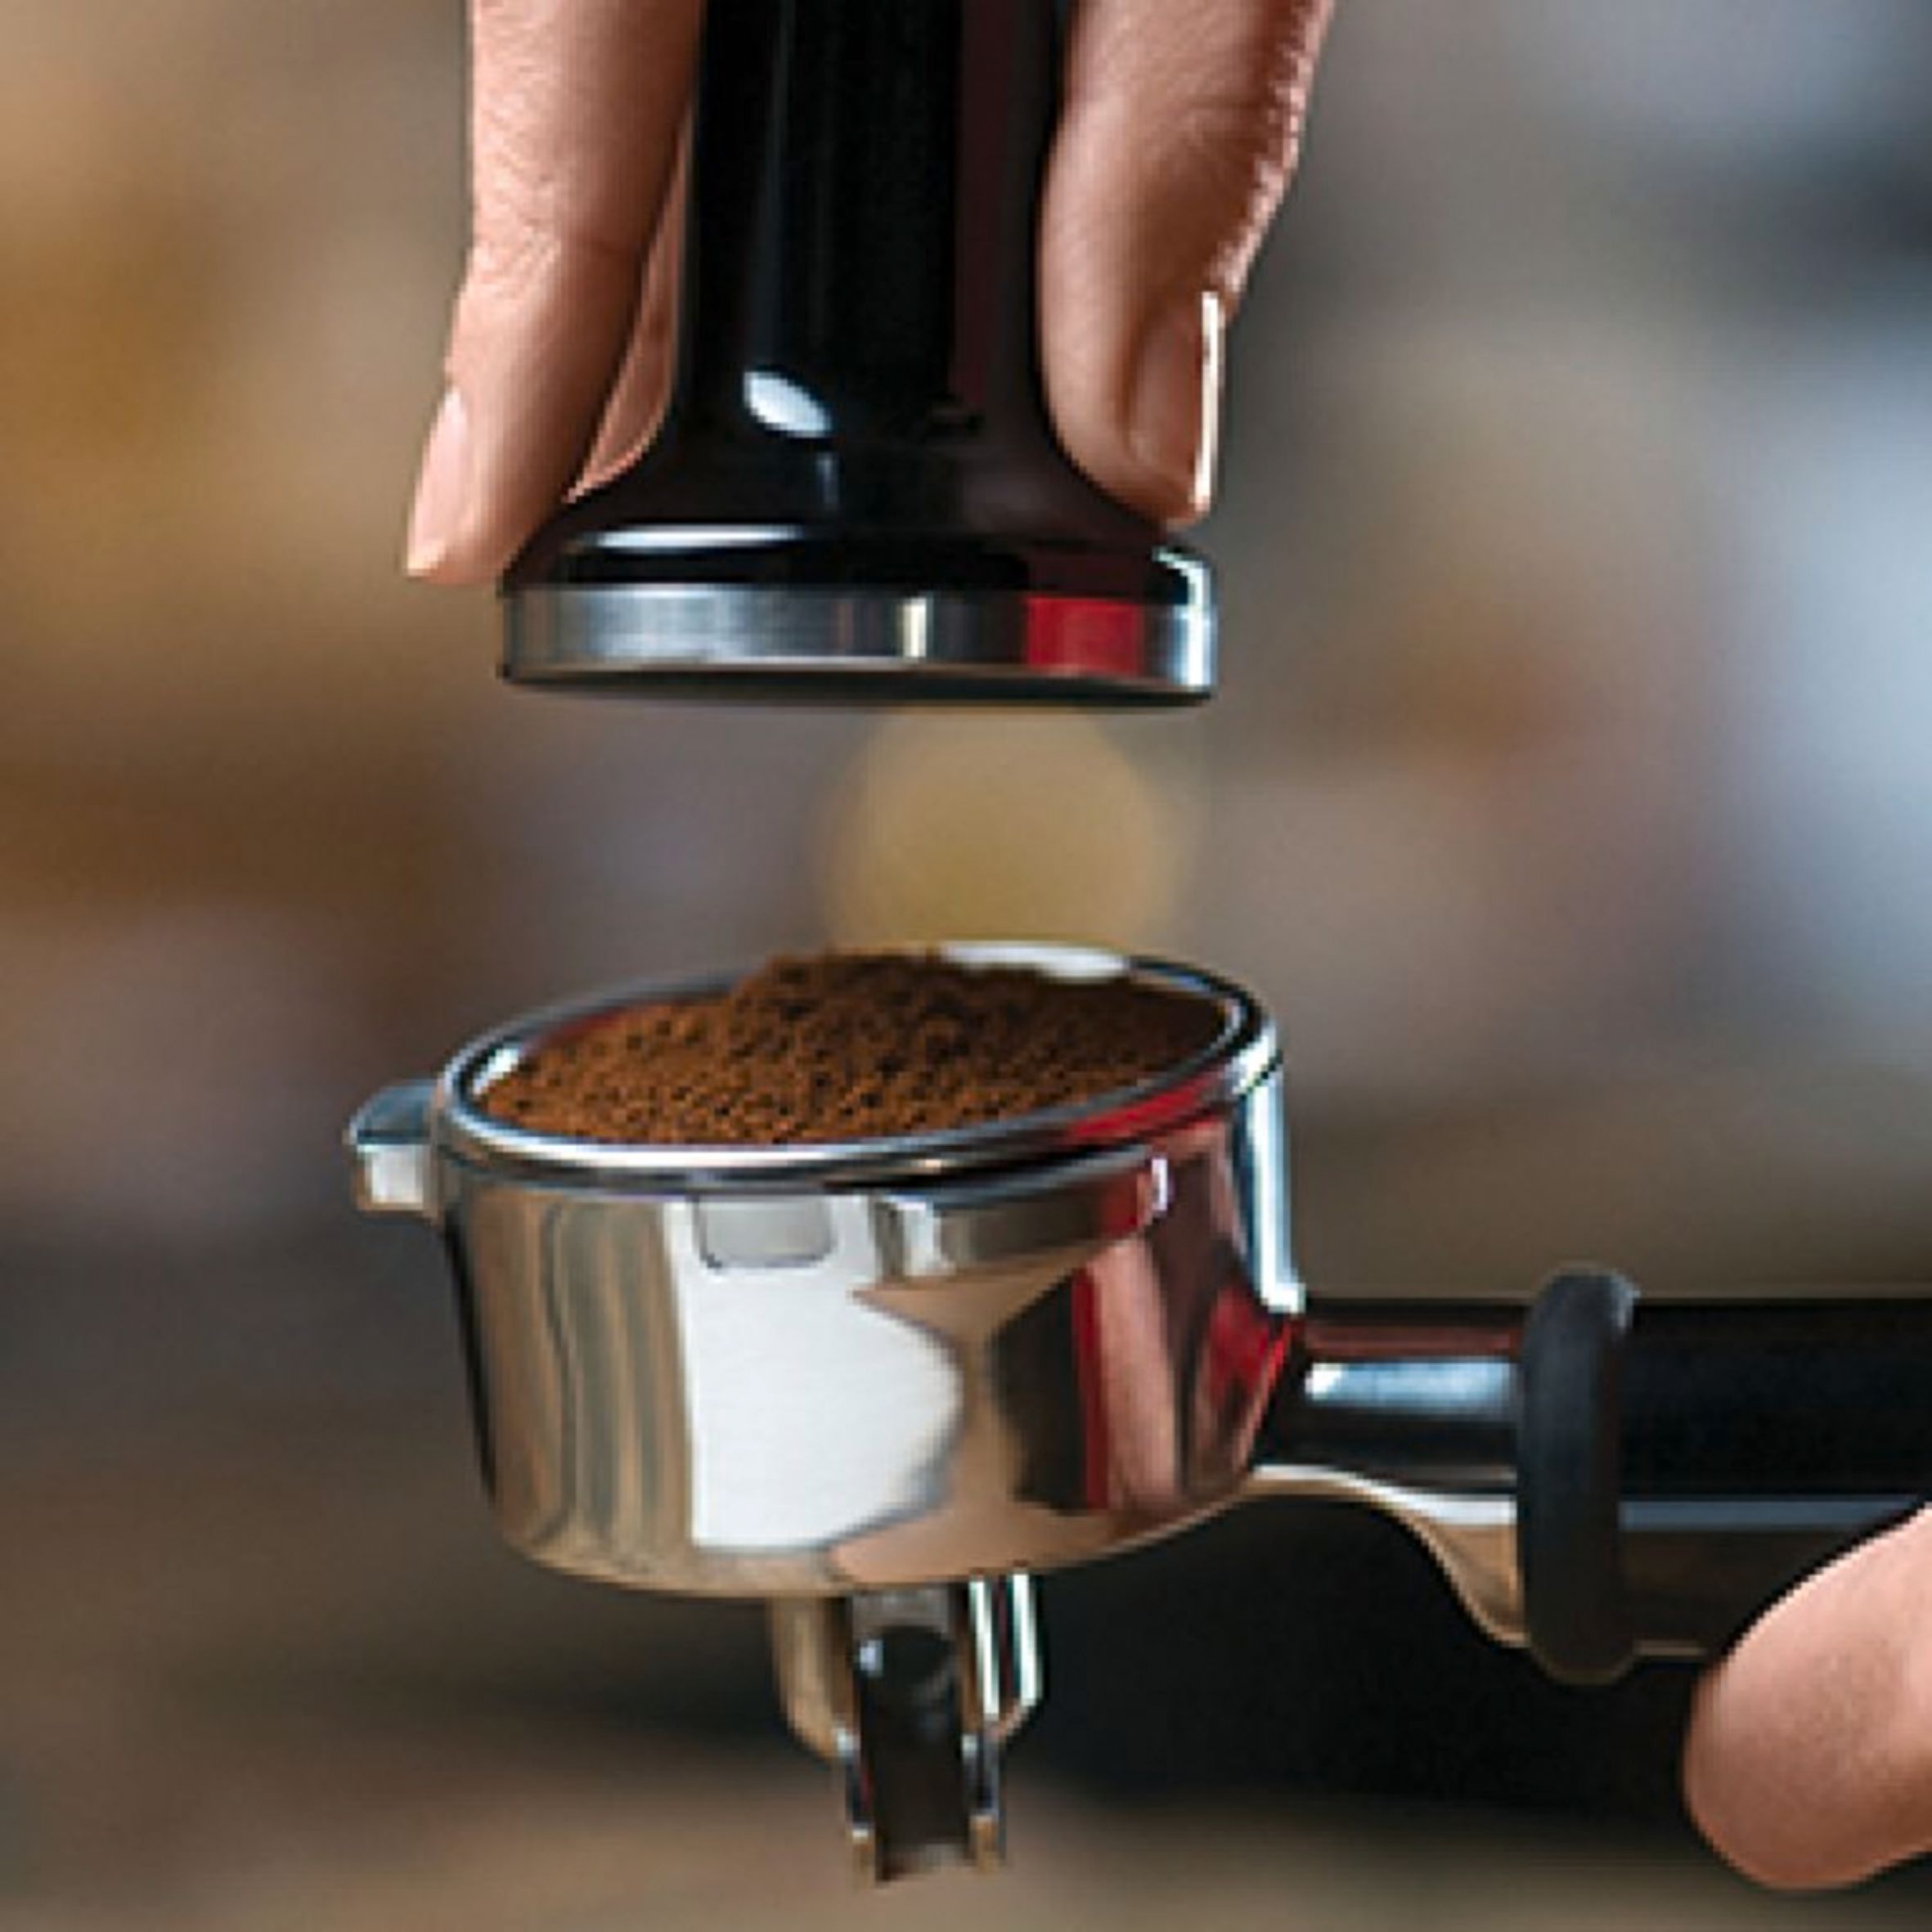 Barista Express Espresso Machine with 15 bars of pressure, Milk